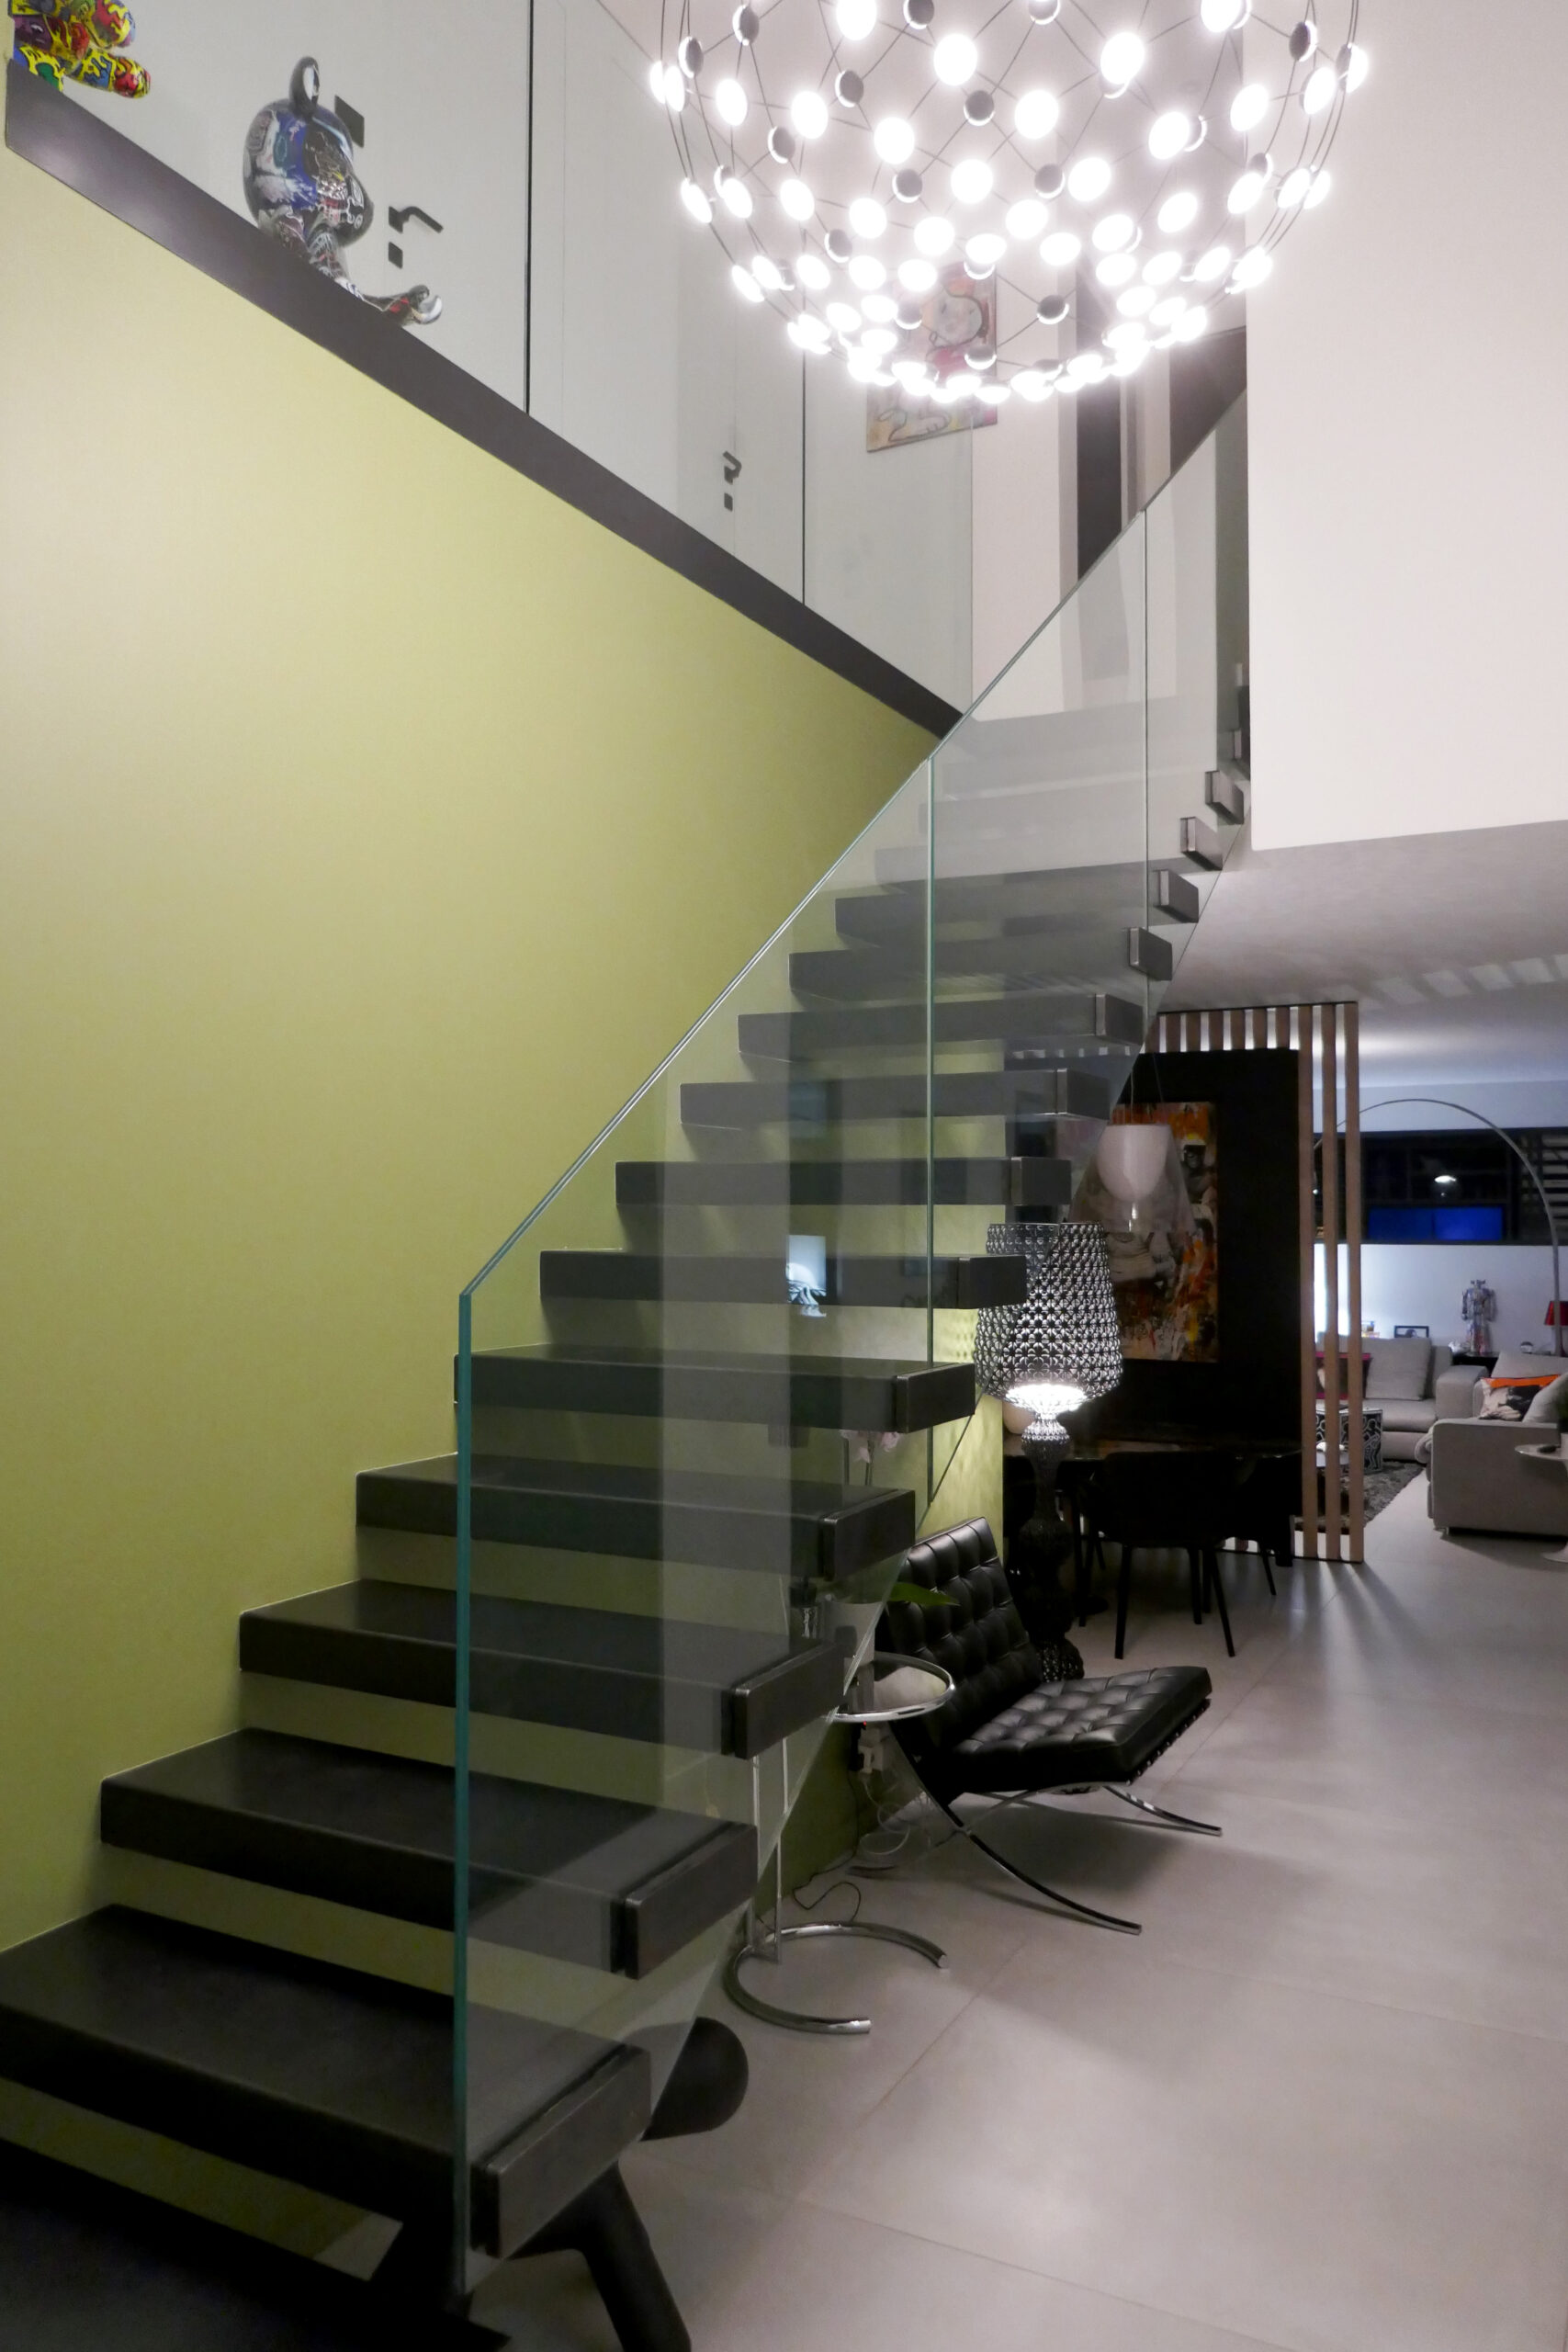 Un escalier en verre métallique dans un salon.